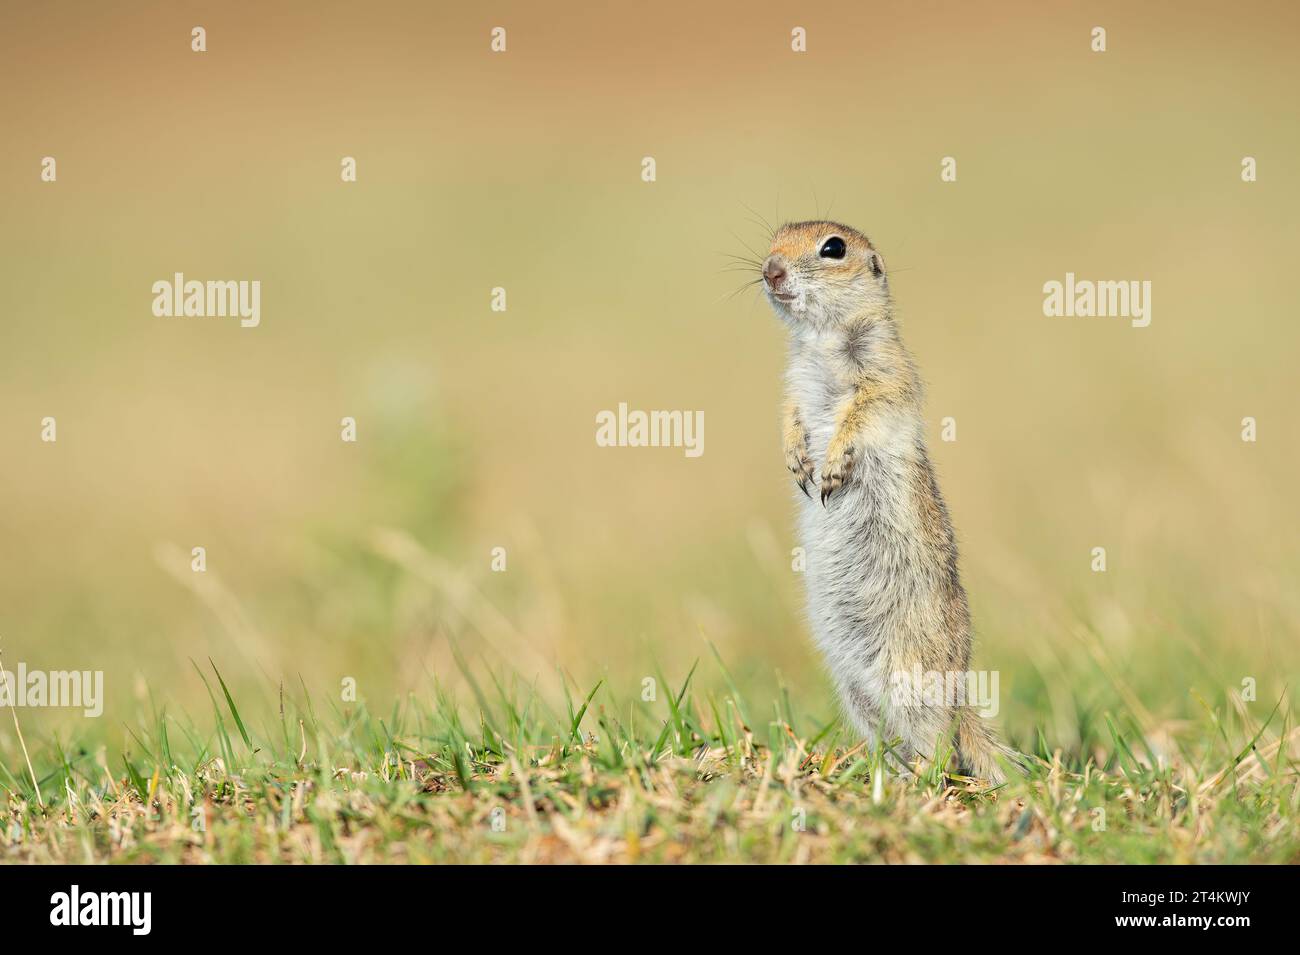 Standing Anatolian Souslik-Ground Squirrel (Spermophilus xanthoprymnus). Stock Photo